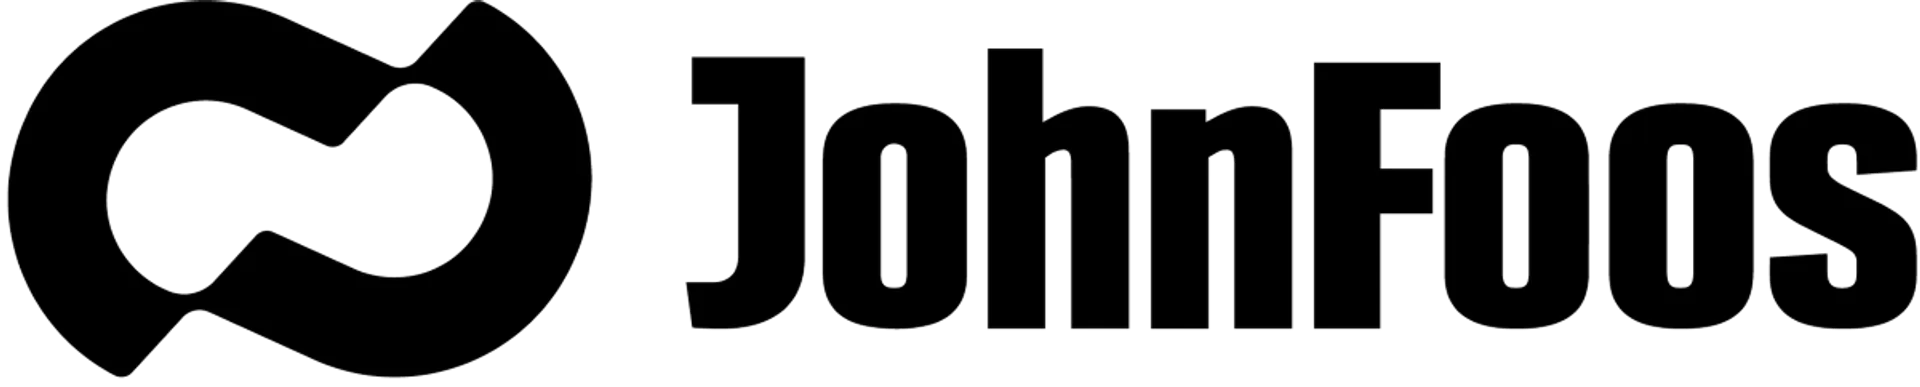 JOHN FOOS logo